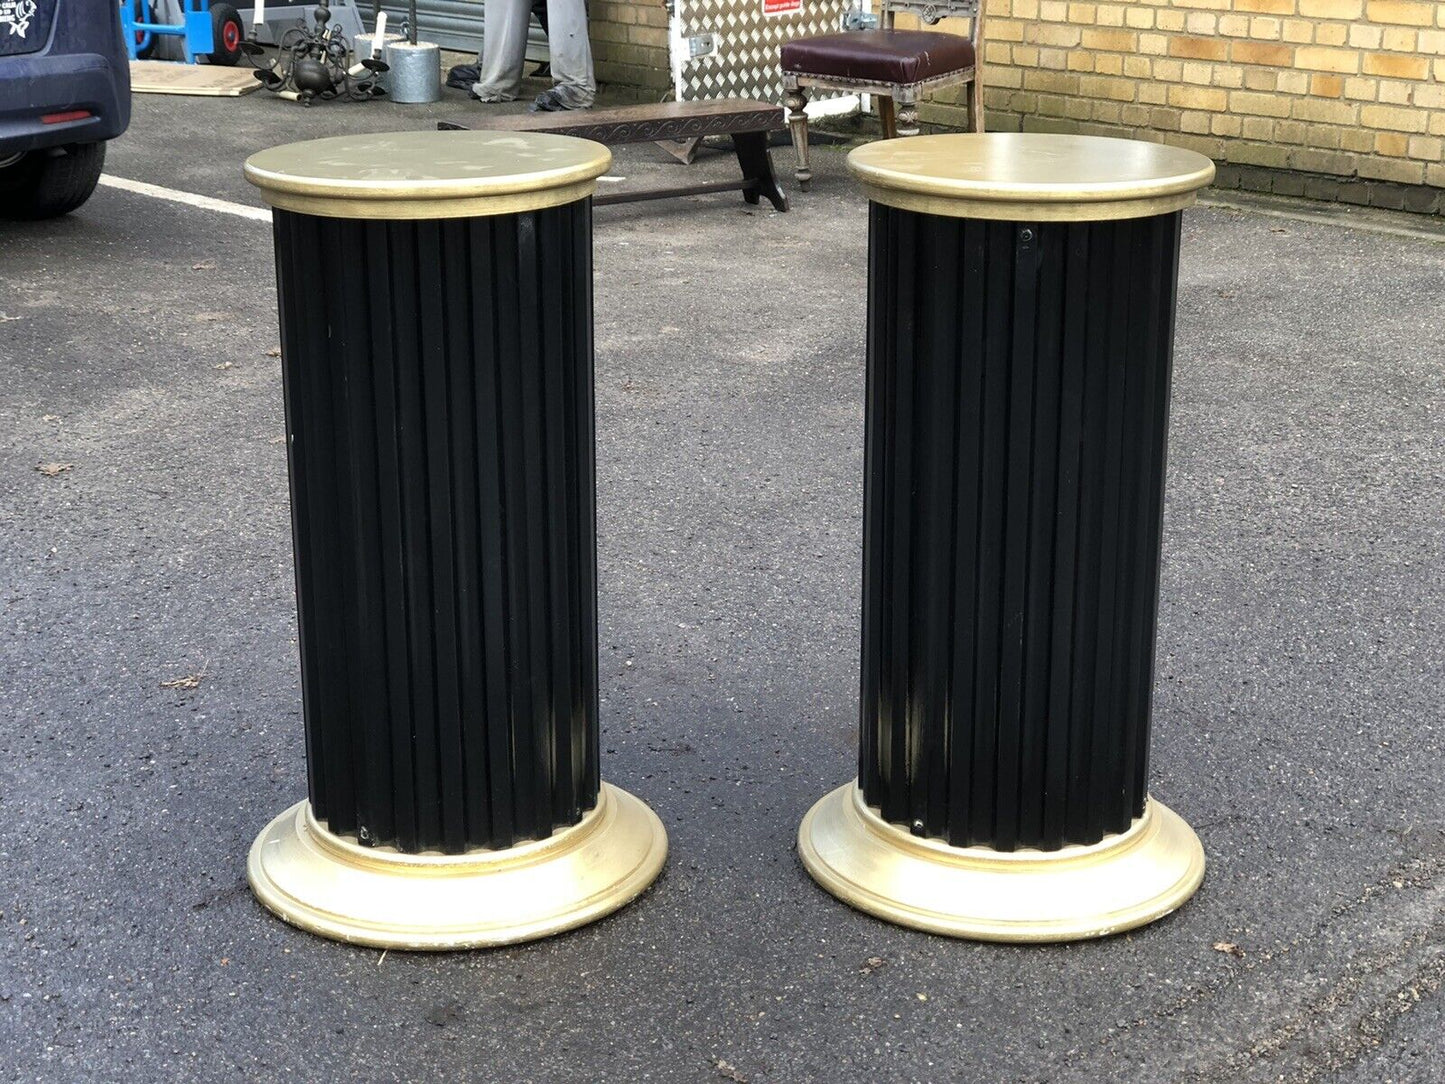 Pair Of Corinthian Columns Display Pedestals